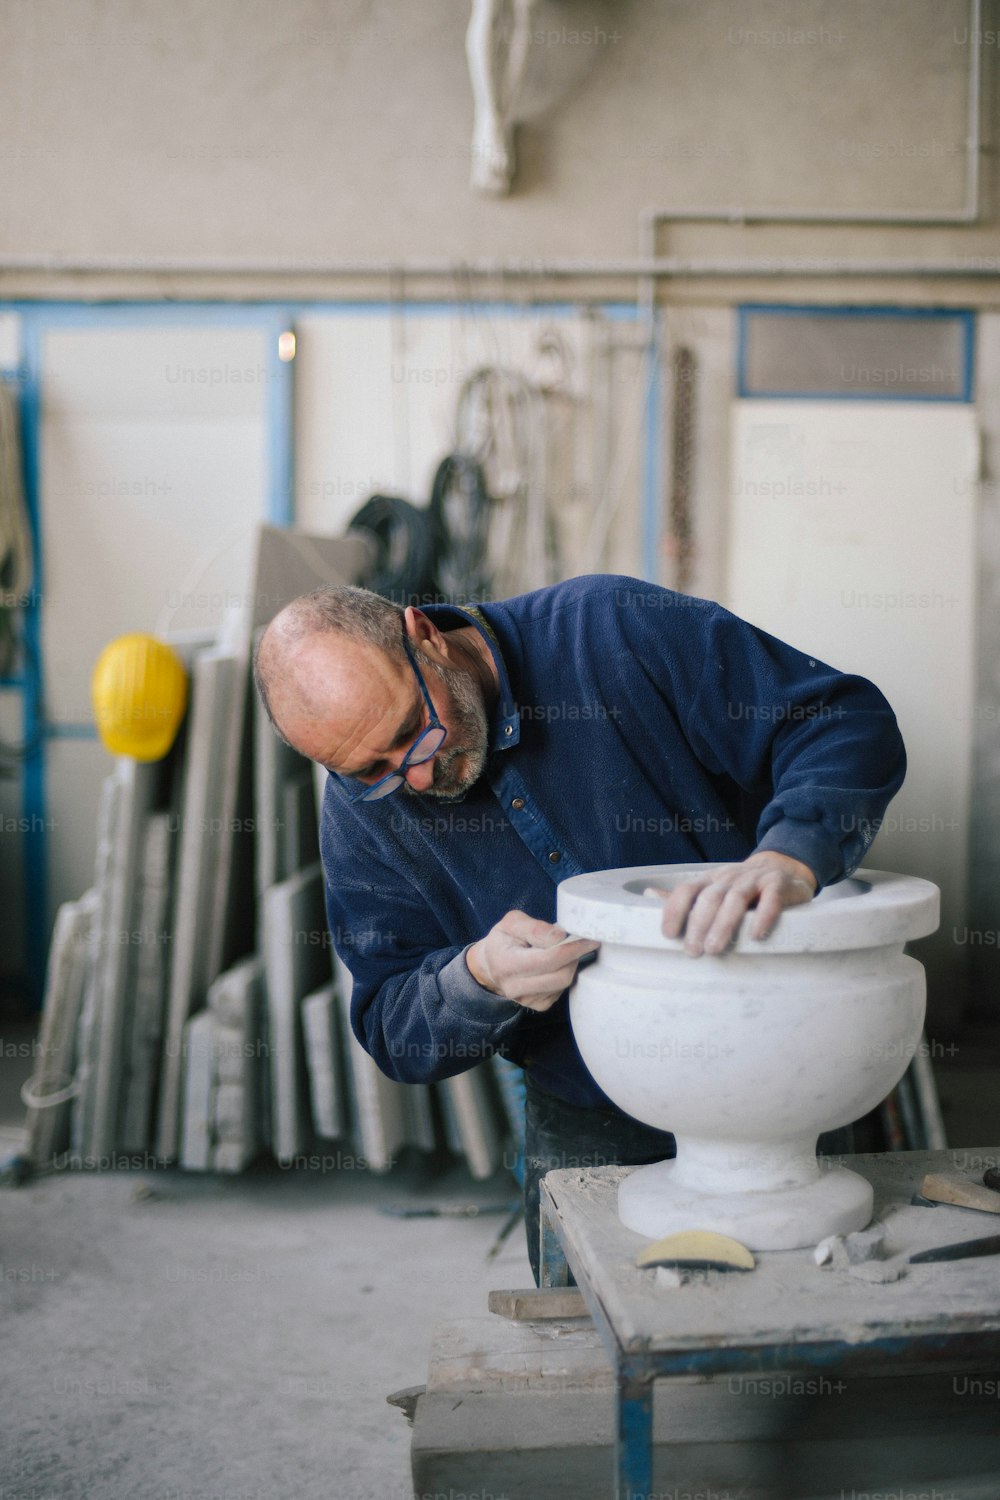 Un uomo sta lavorando su un vaso bianco